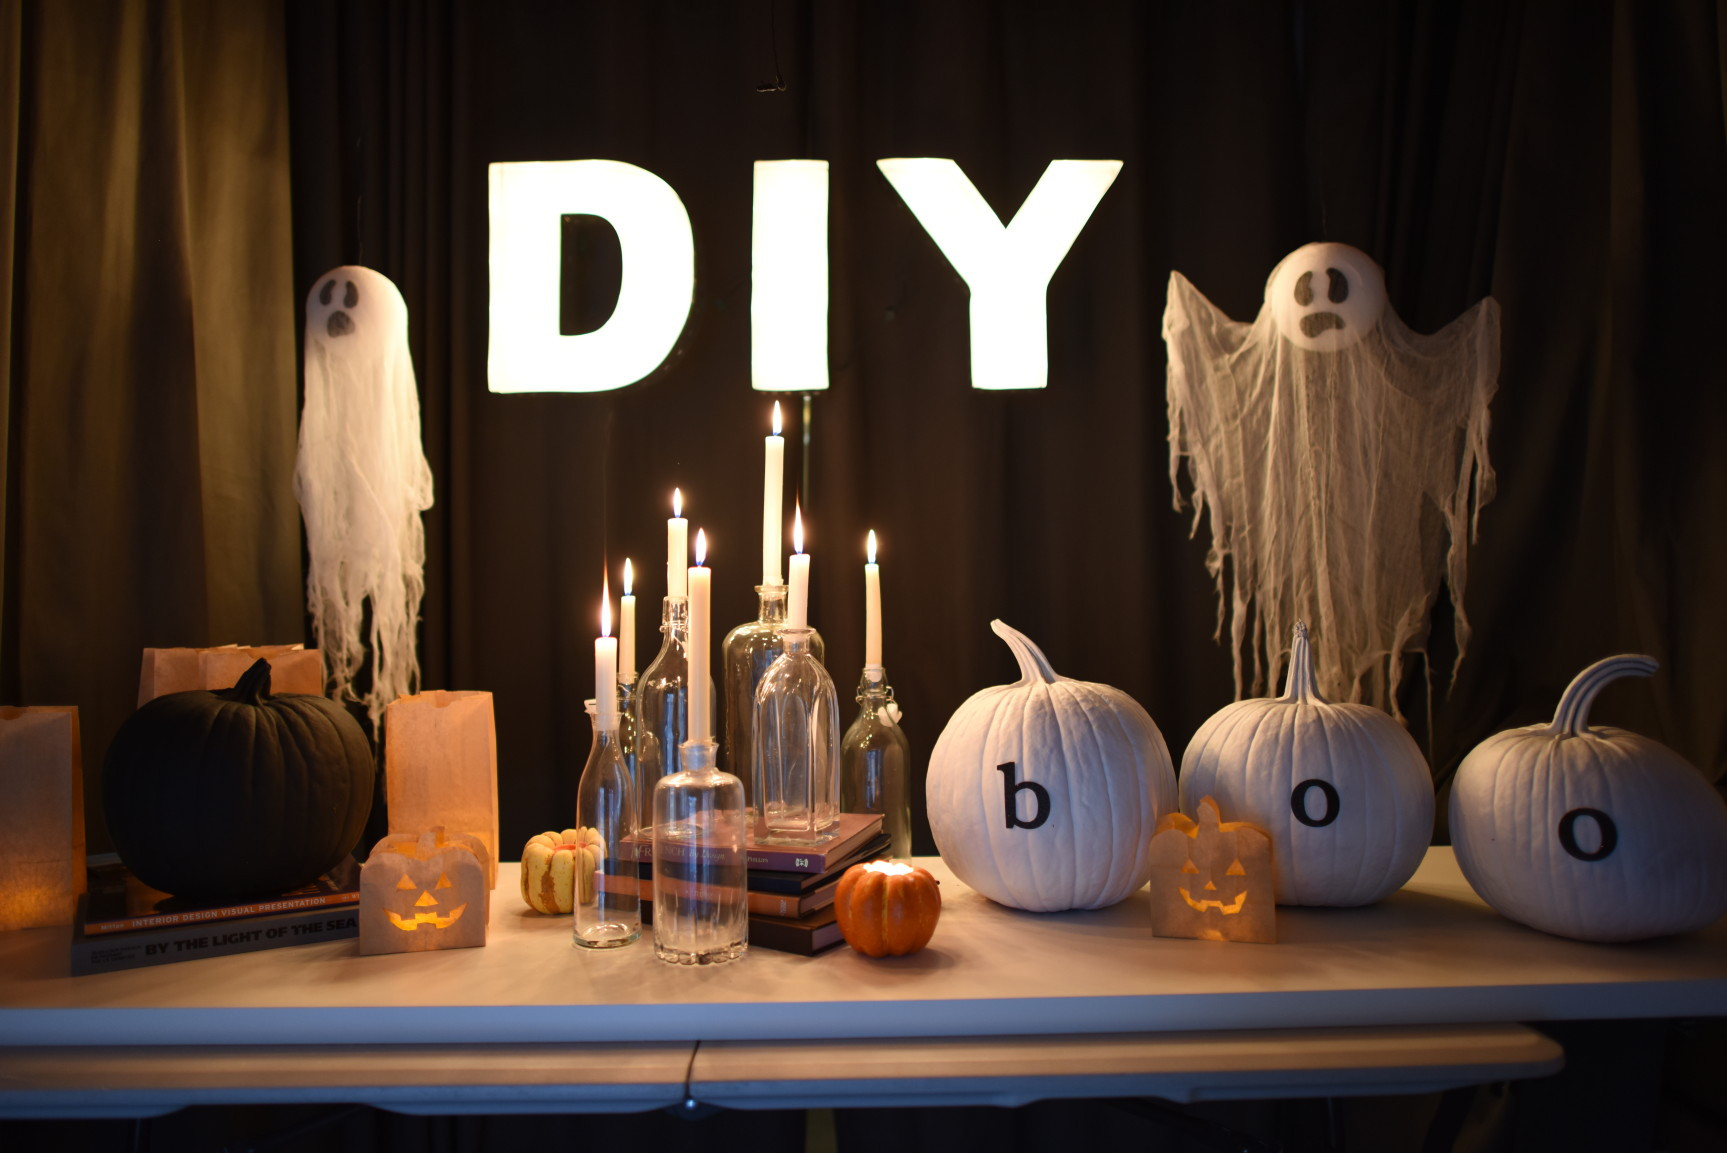 Halloween Party Decoration Ideas Diy
 5 Easy Creepy Yet Classy Halloween Party Decorations [on a